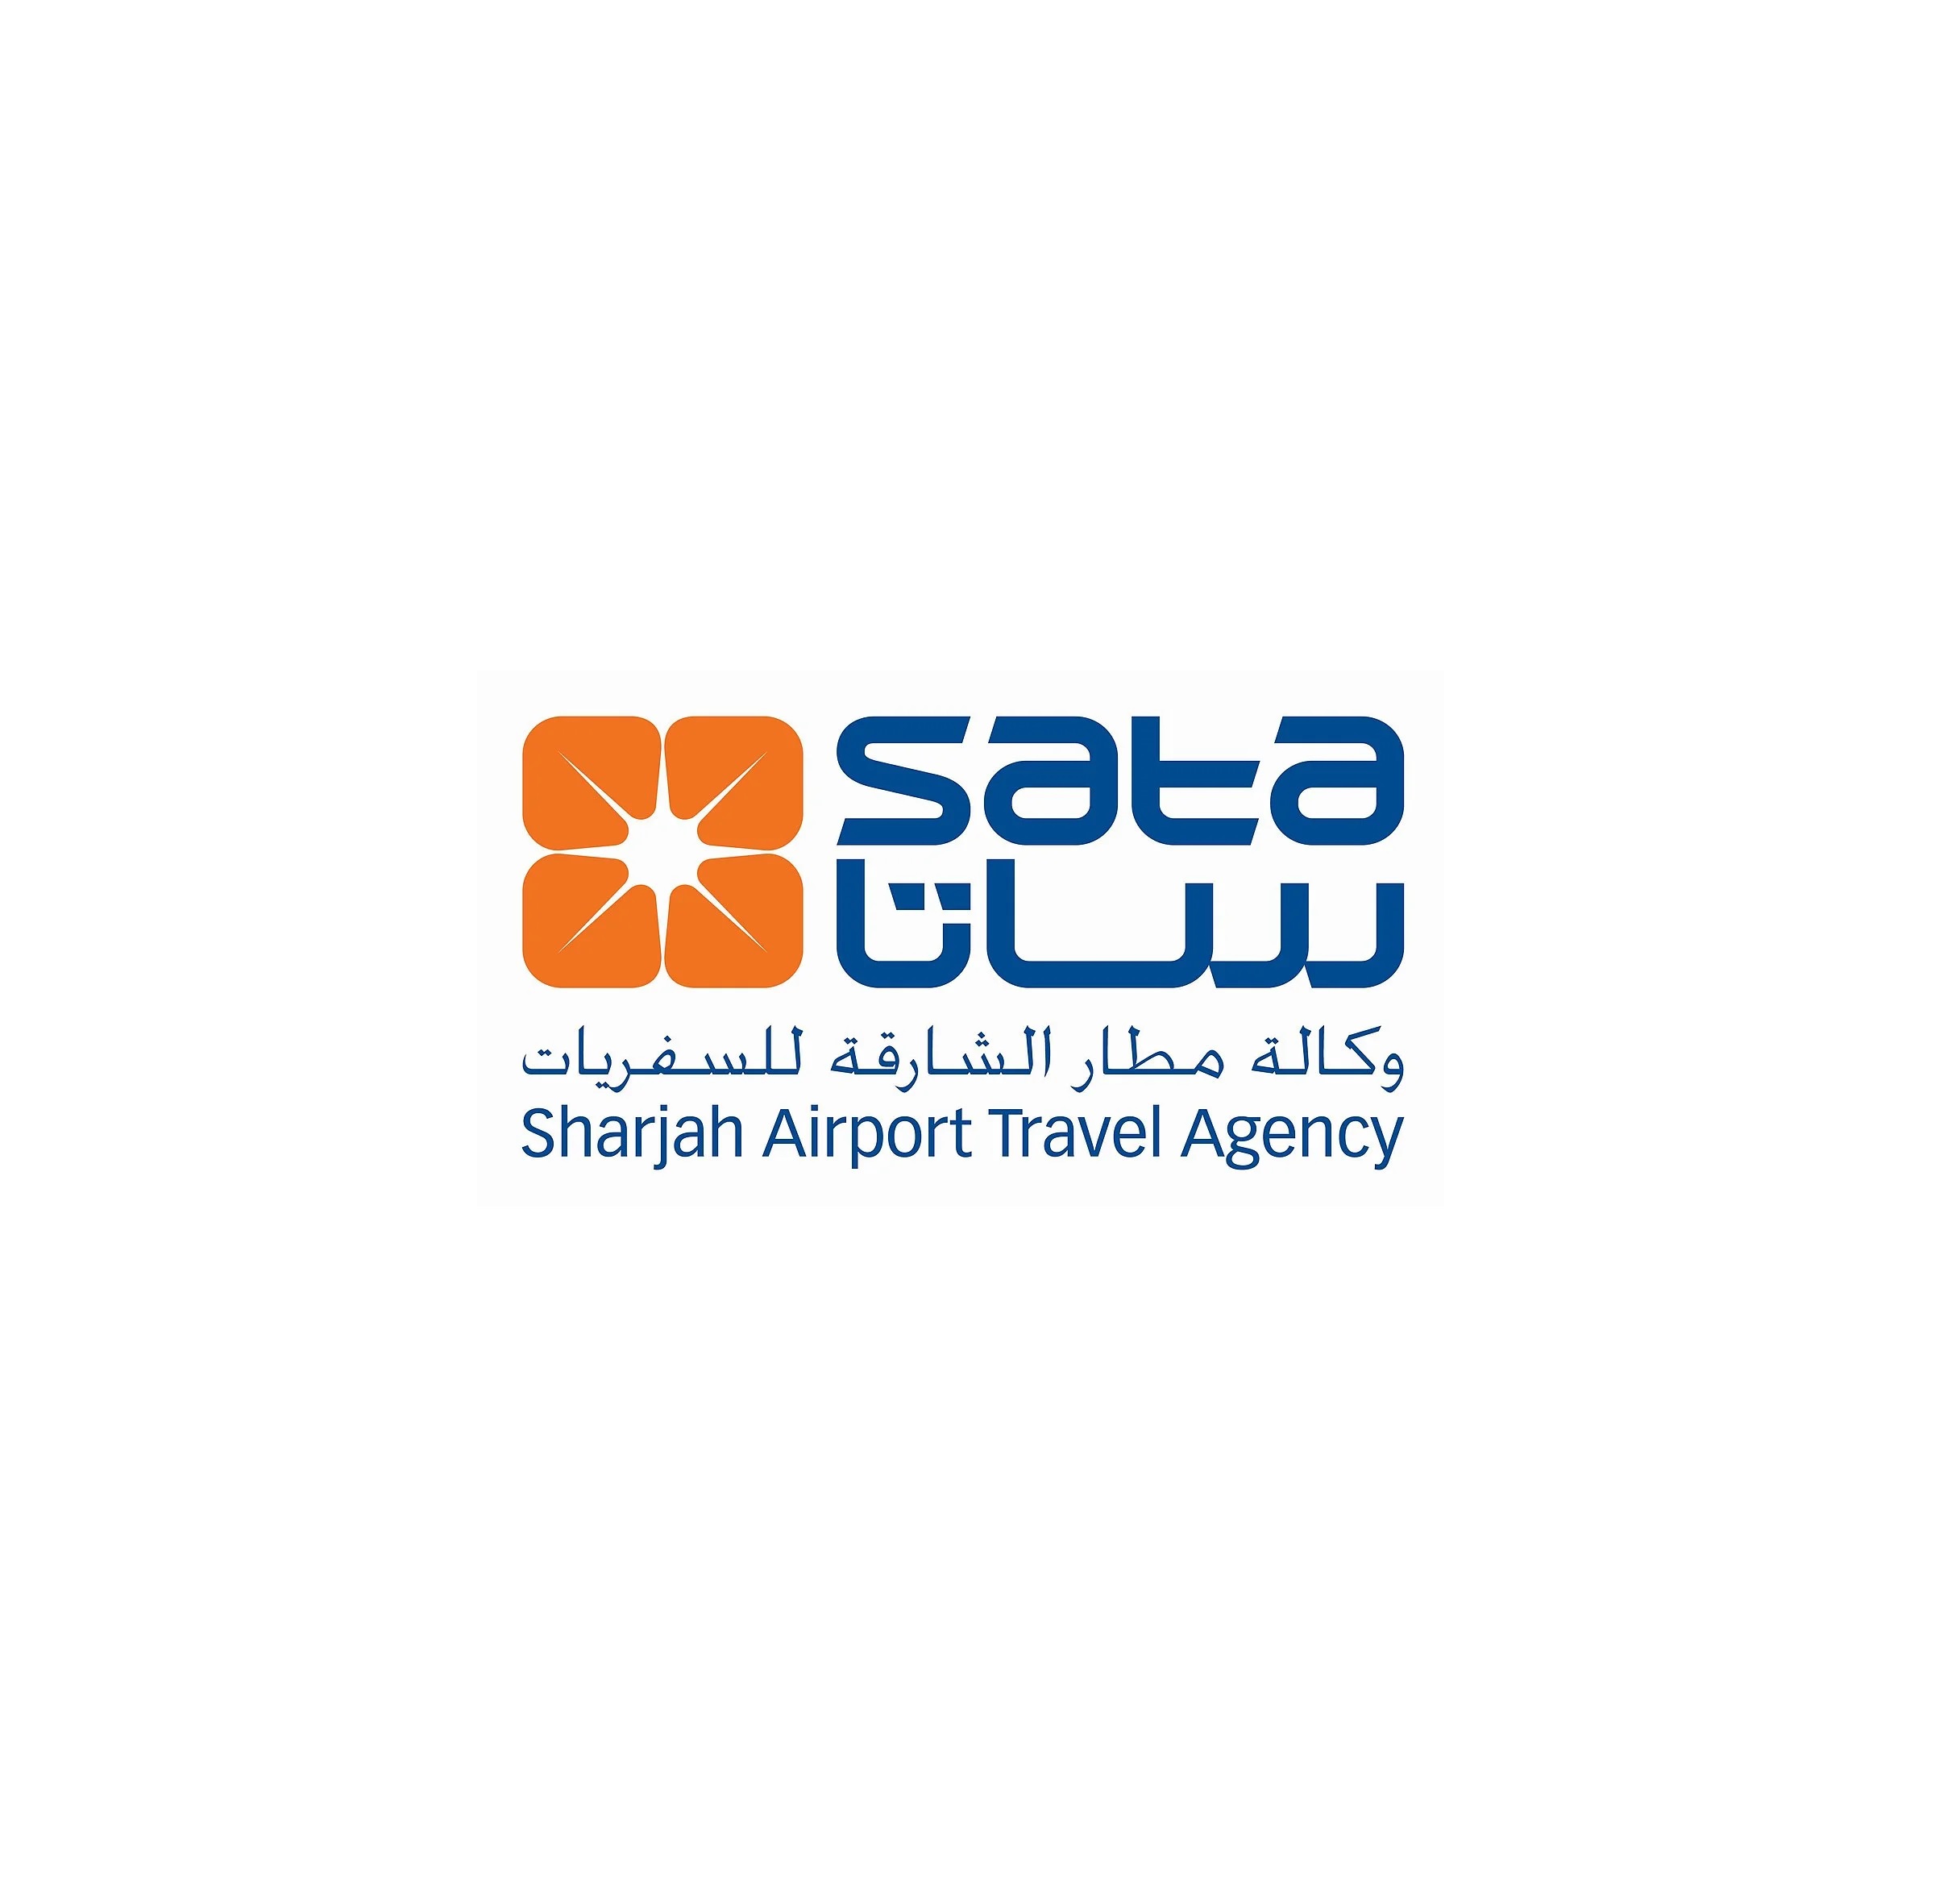 sharjah airport travel agency (sata)